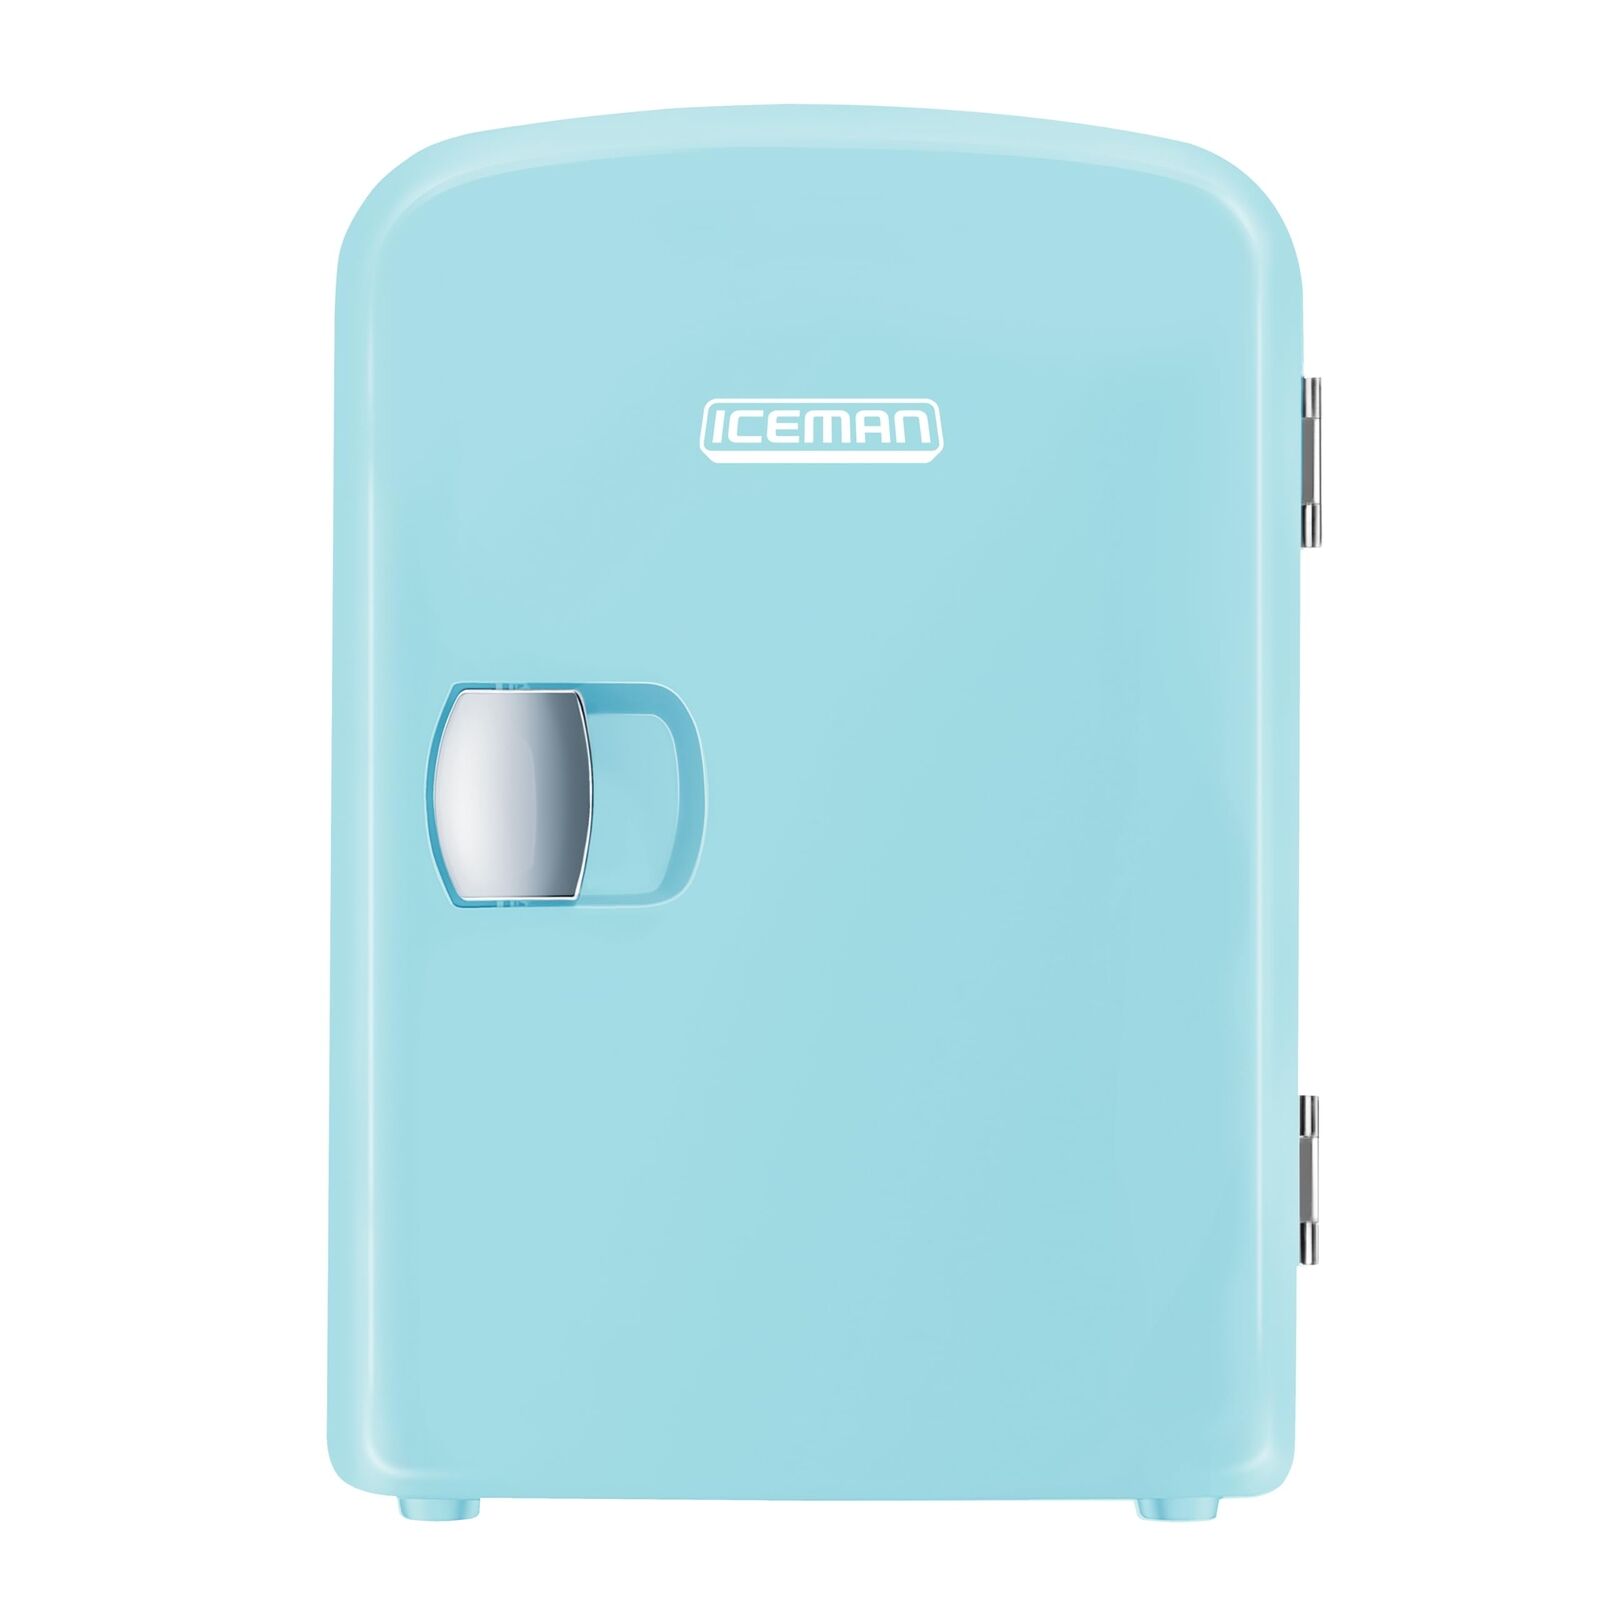 Chefman - Iceman Mini Portable Blue Personal Fridge Cools Or Heats & Provides...